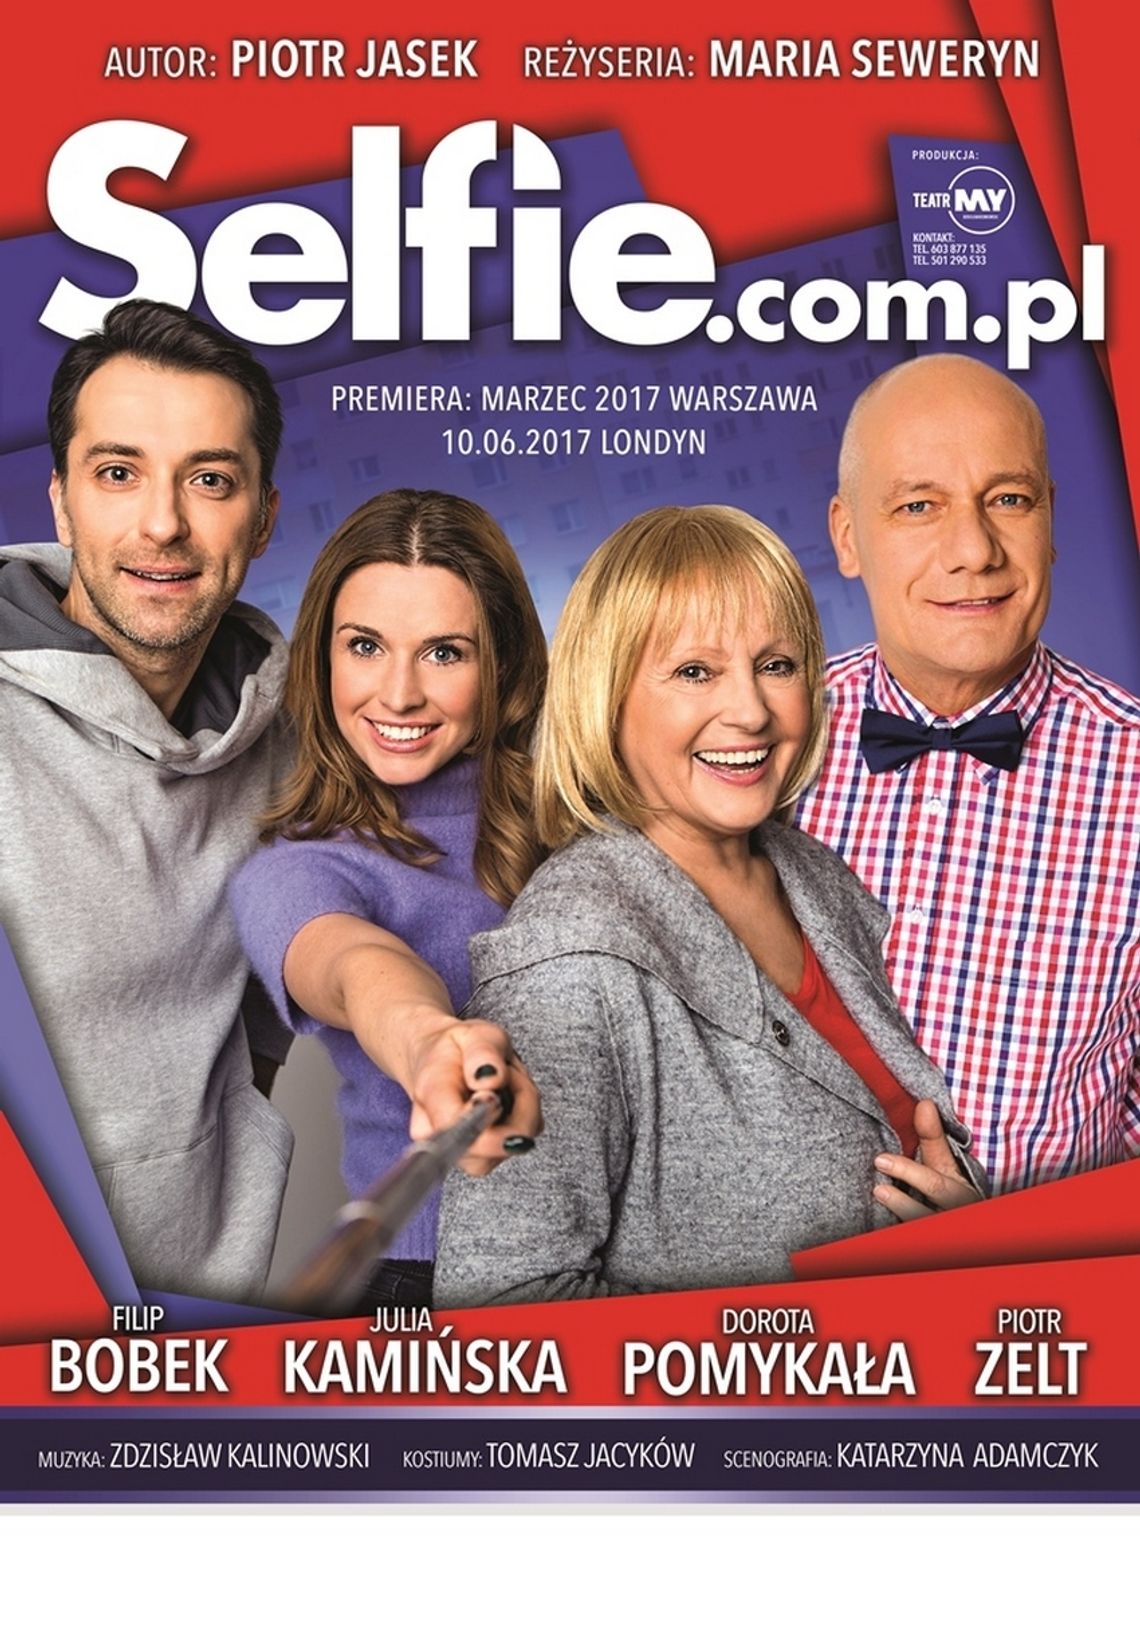 "Selfie.com.pl"